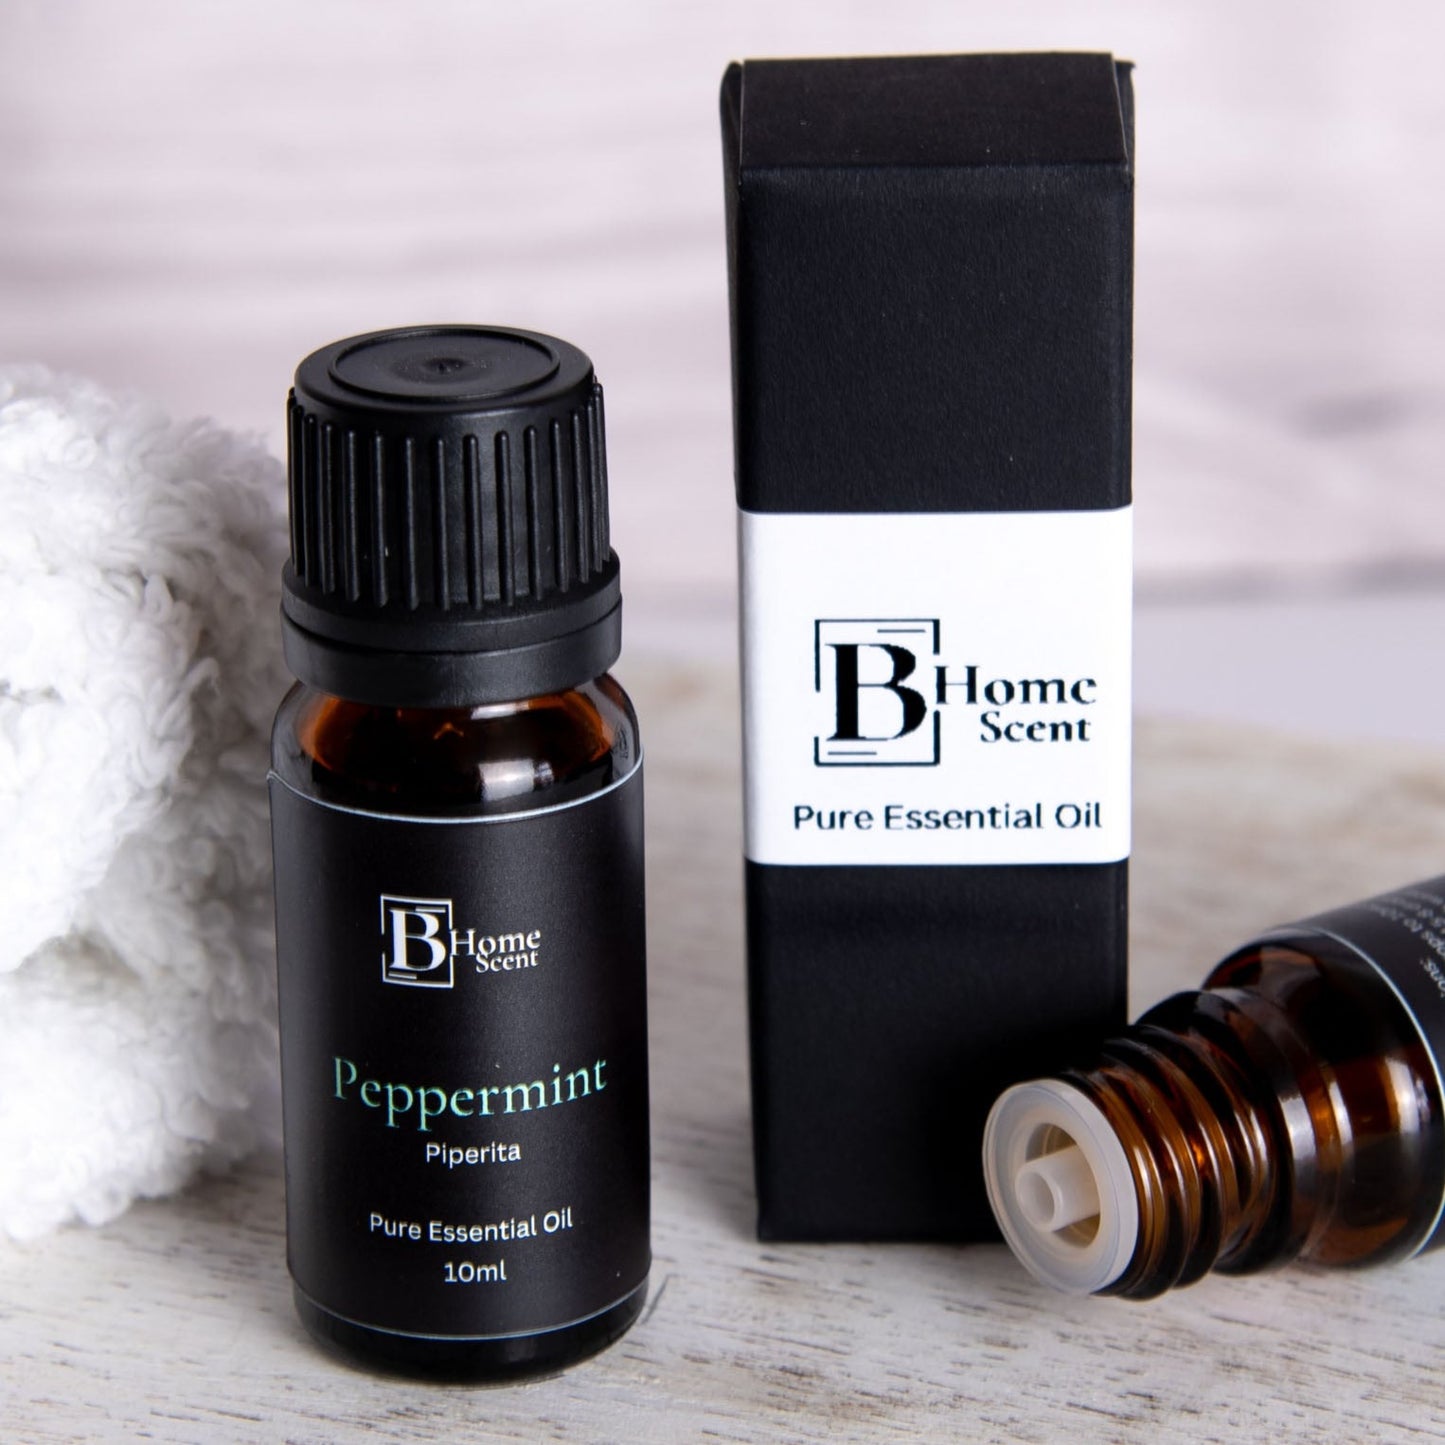 Peppermint (Piperita) Essential Oil 10ml - Great for Skin, Headache Relief, Energy Boost